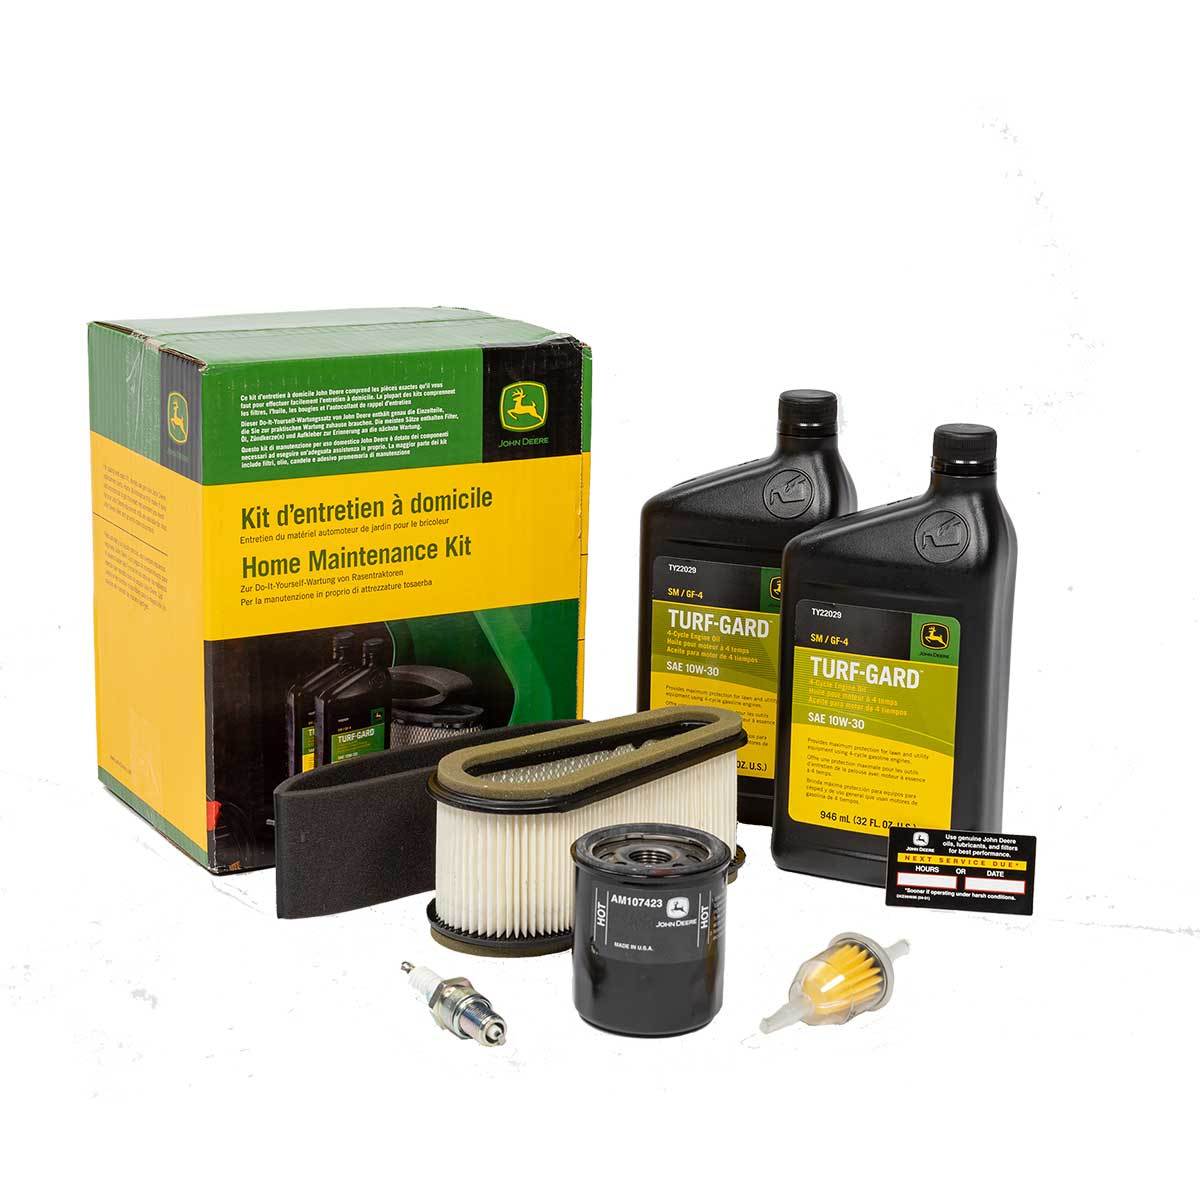 John Deere LG185 Home Maintenance Kit for 100, 200, 300, F500, GT and LX Series